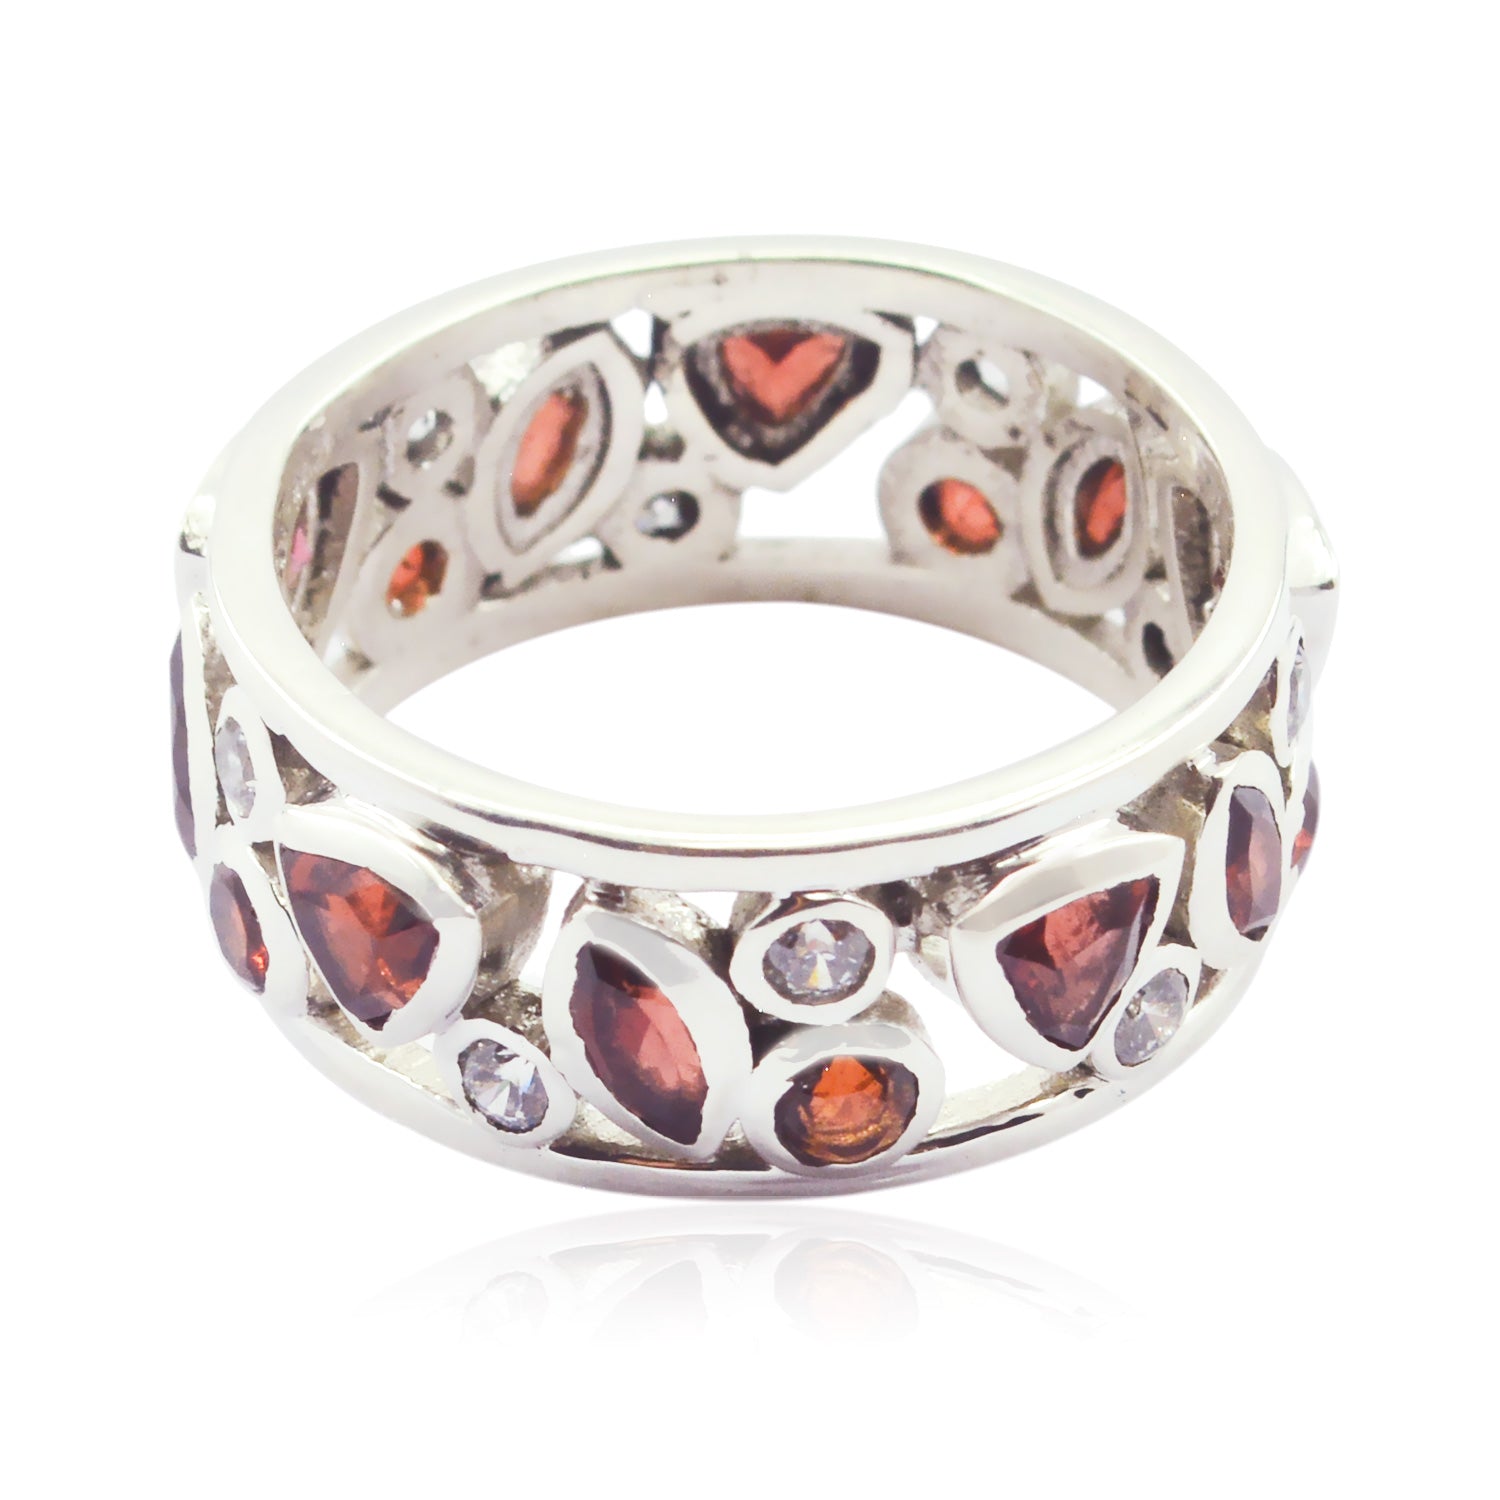 Riyo Well-Formed Gem Garnet 925 Silver Ring Gift For Girlfriend